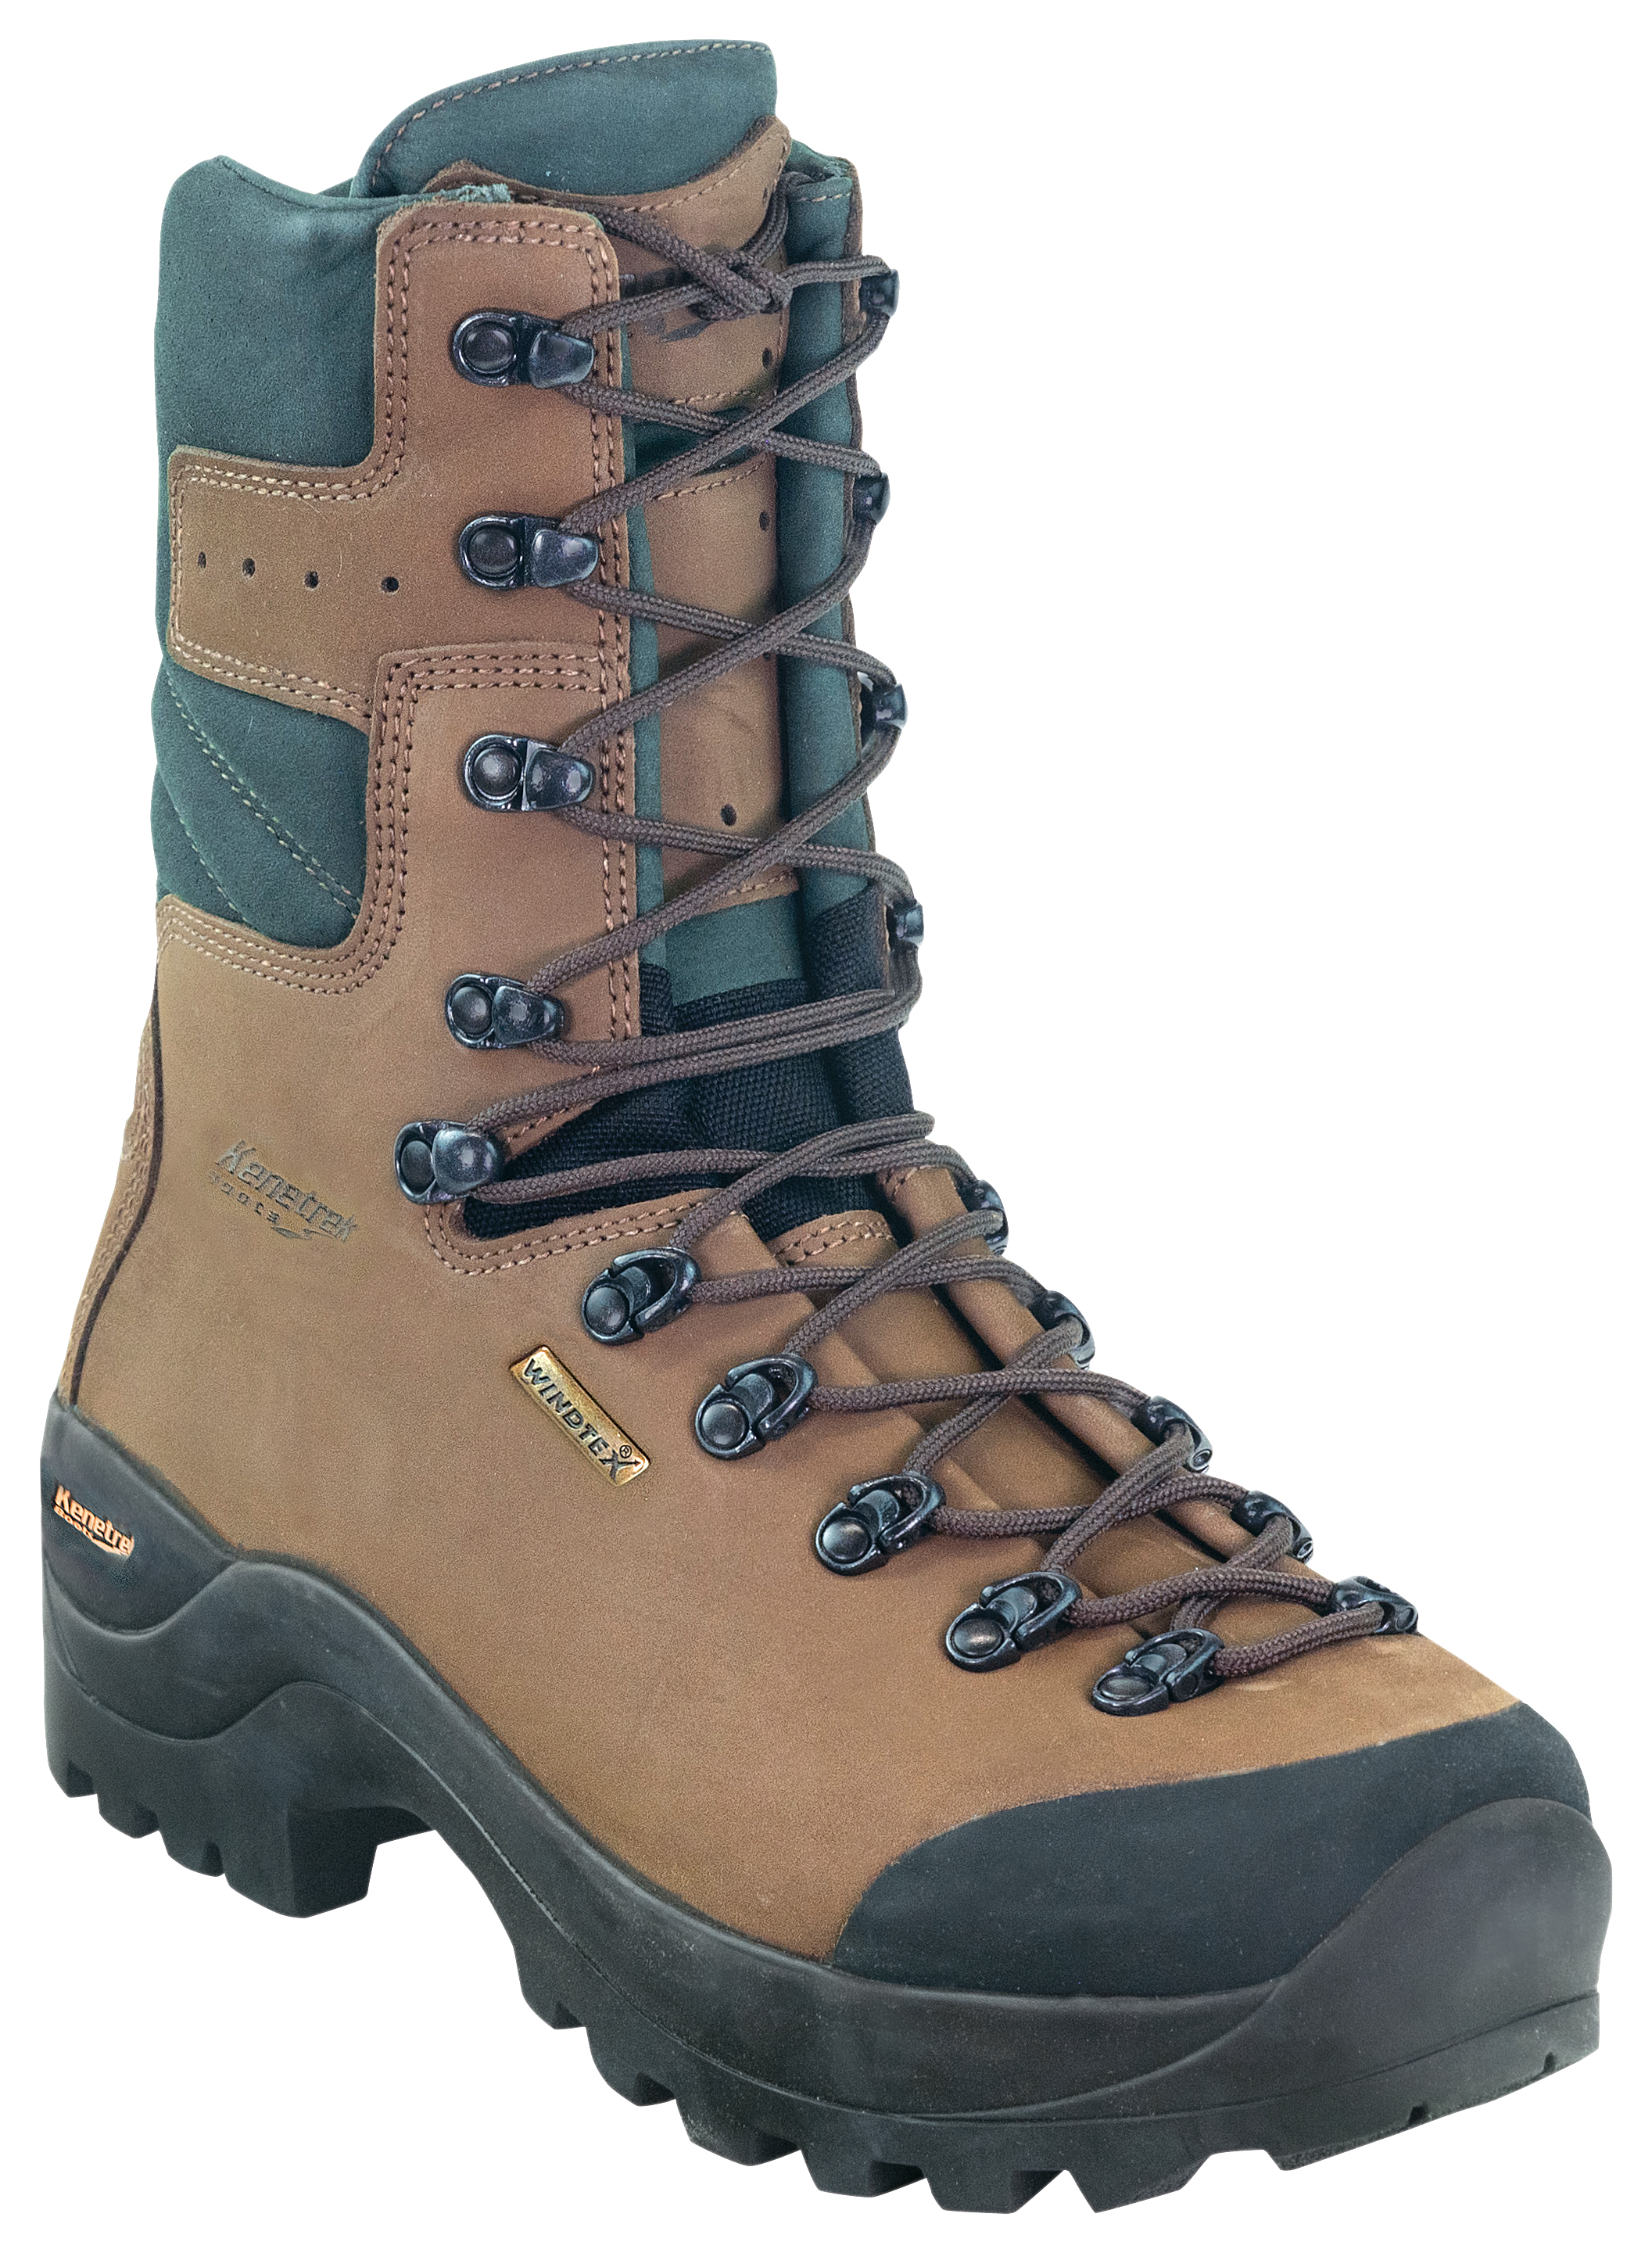 Kenetrek Mountain Guide 400 Insulated Waterproof Hunting Boots for Men